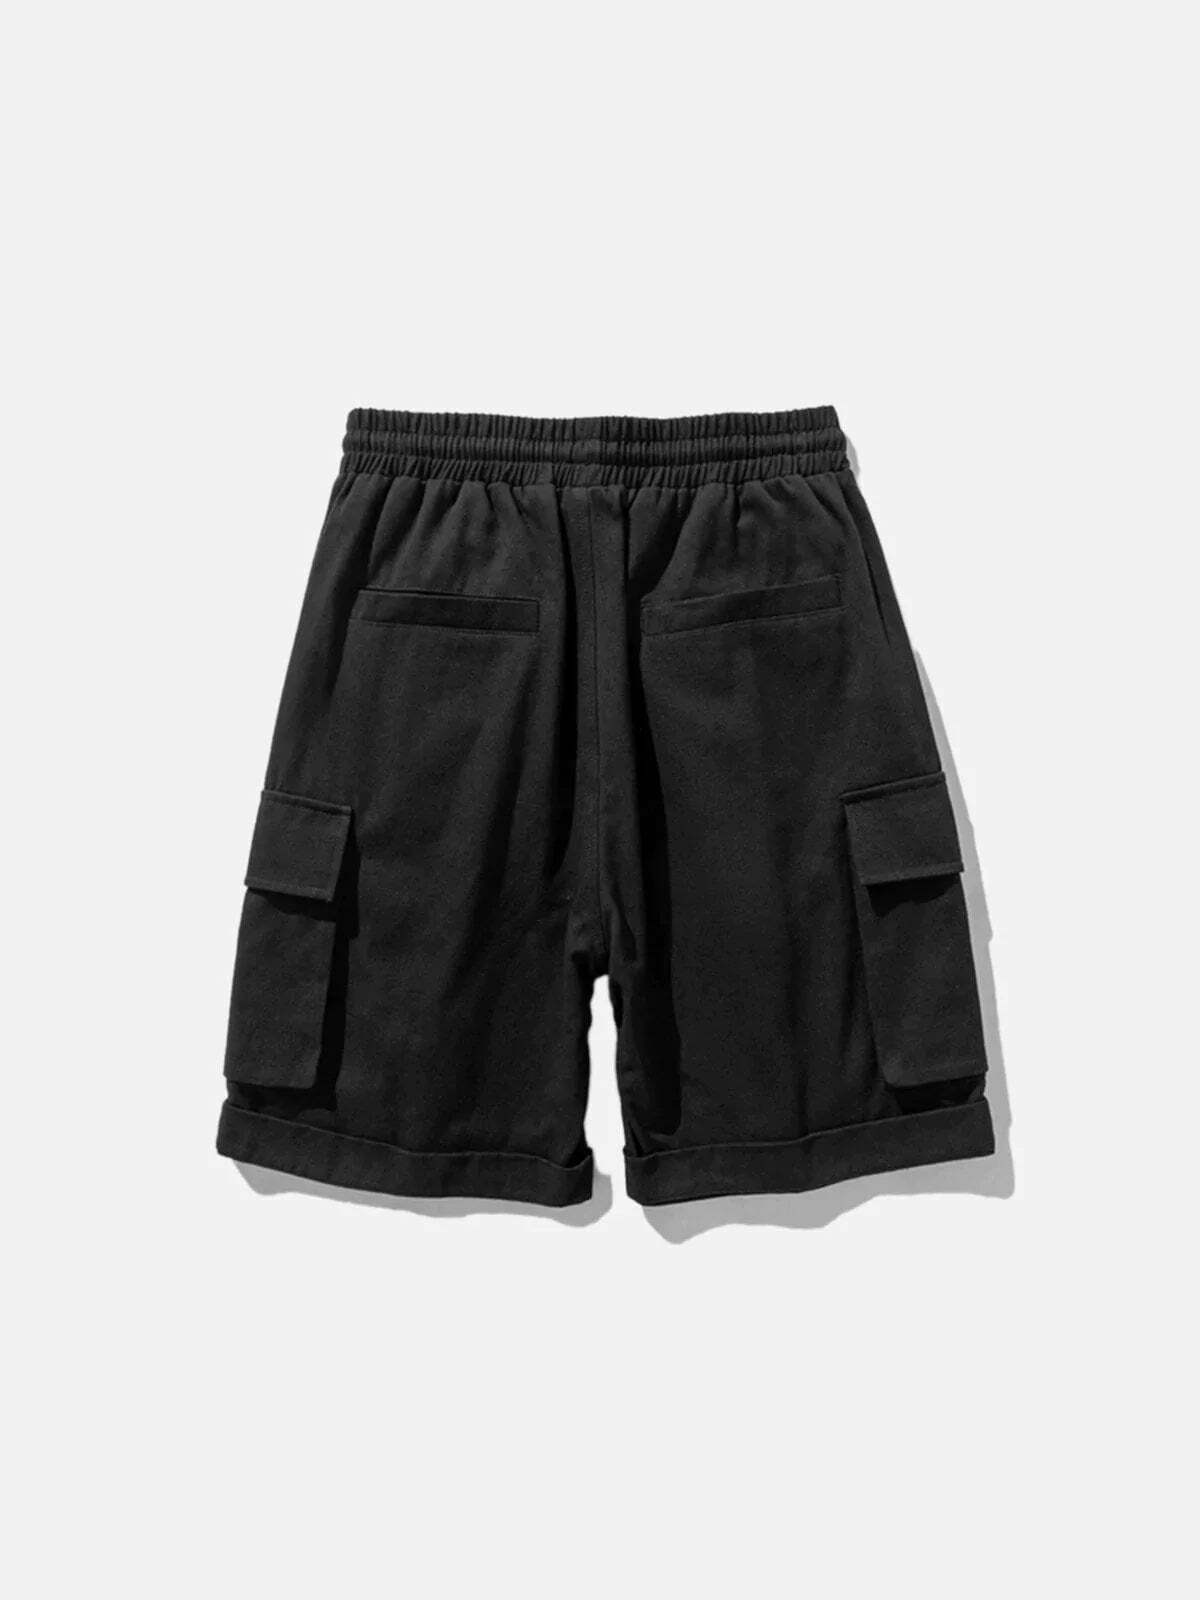 discreet side pocket shorts urban functional essential 6581